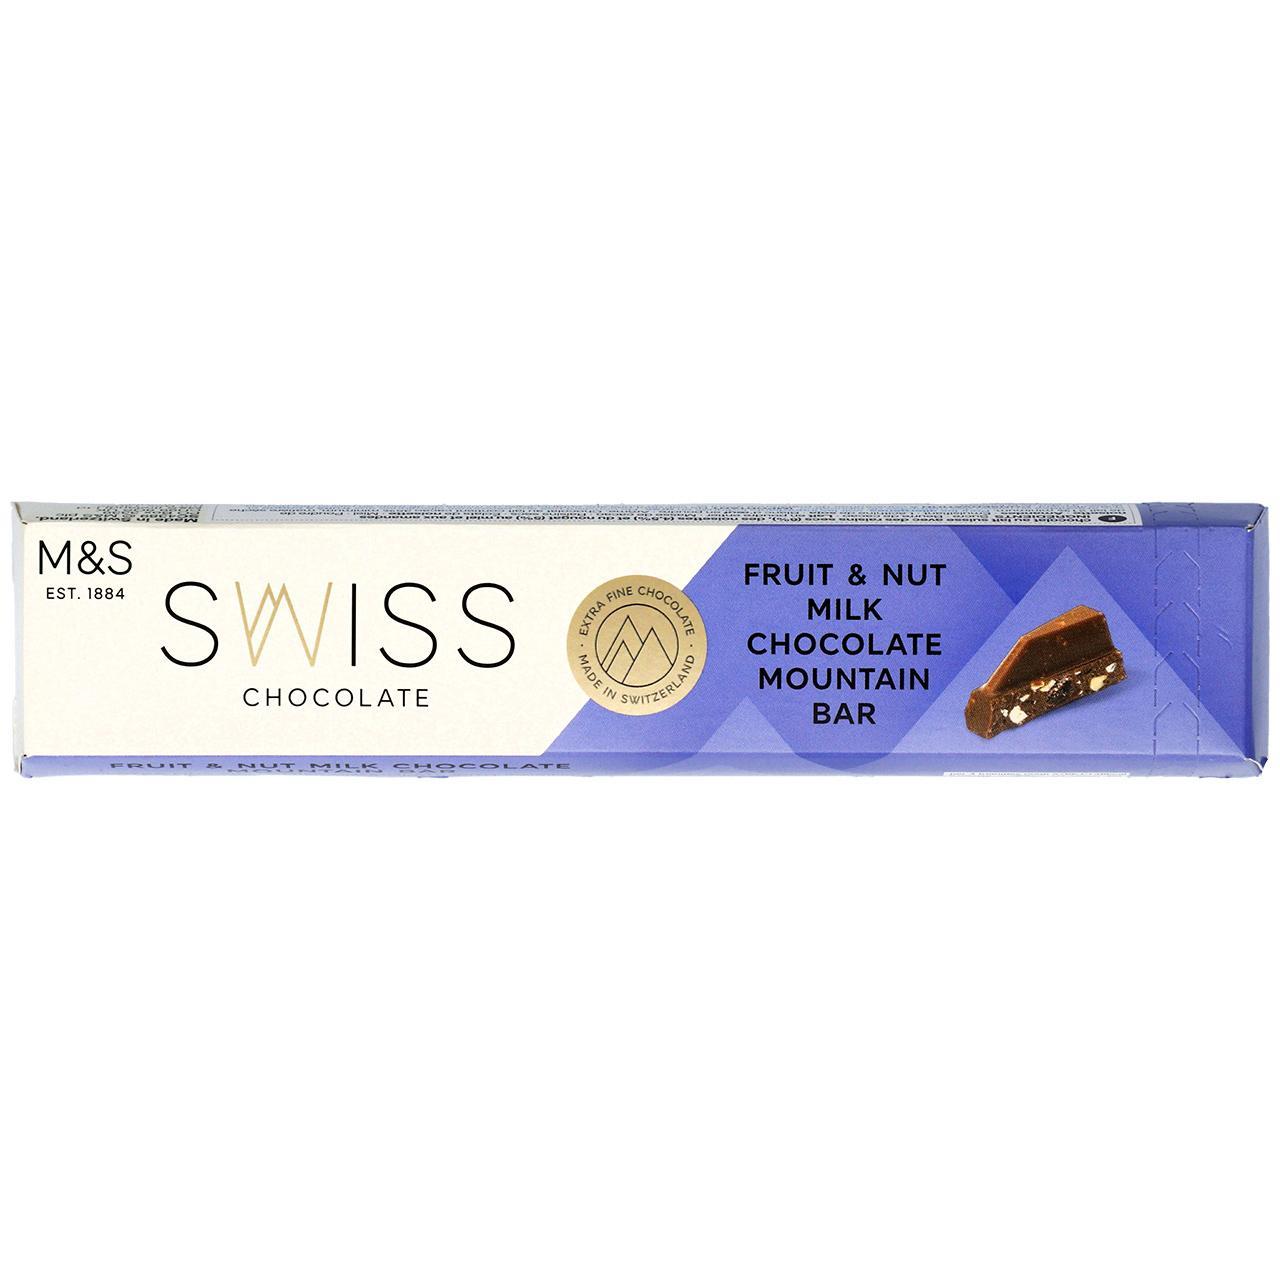 M&S Swiss Fruit & Nut Milk Chocolate Mountain Bar